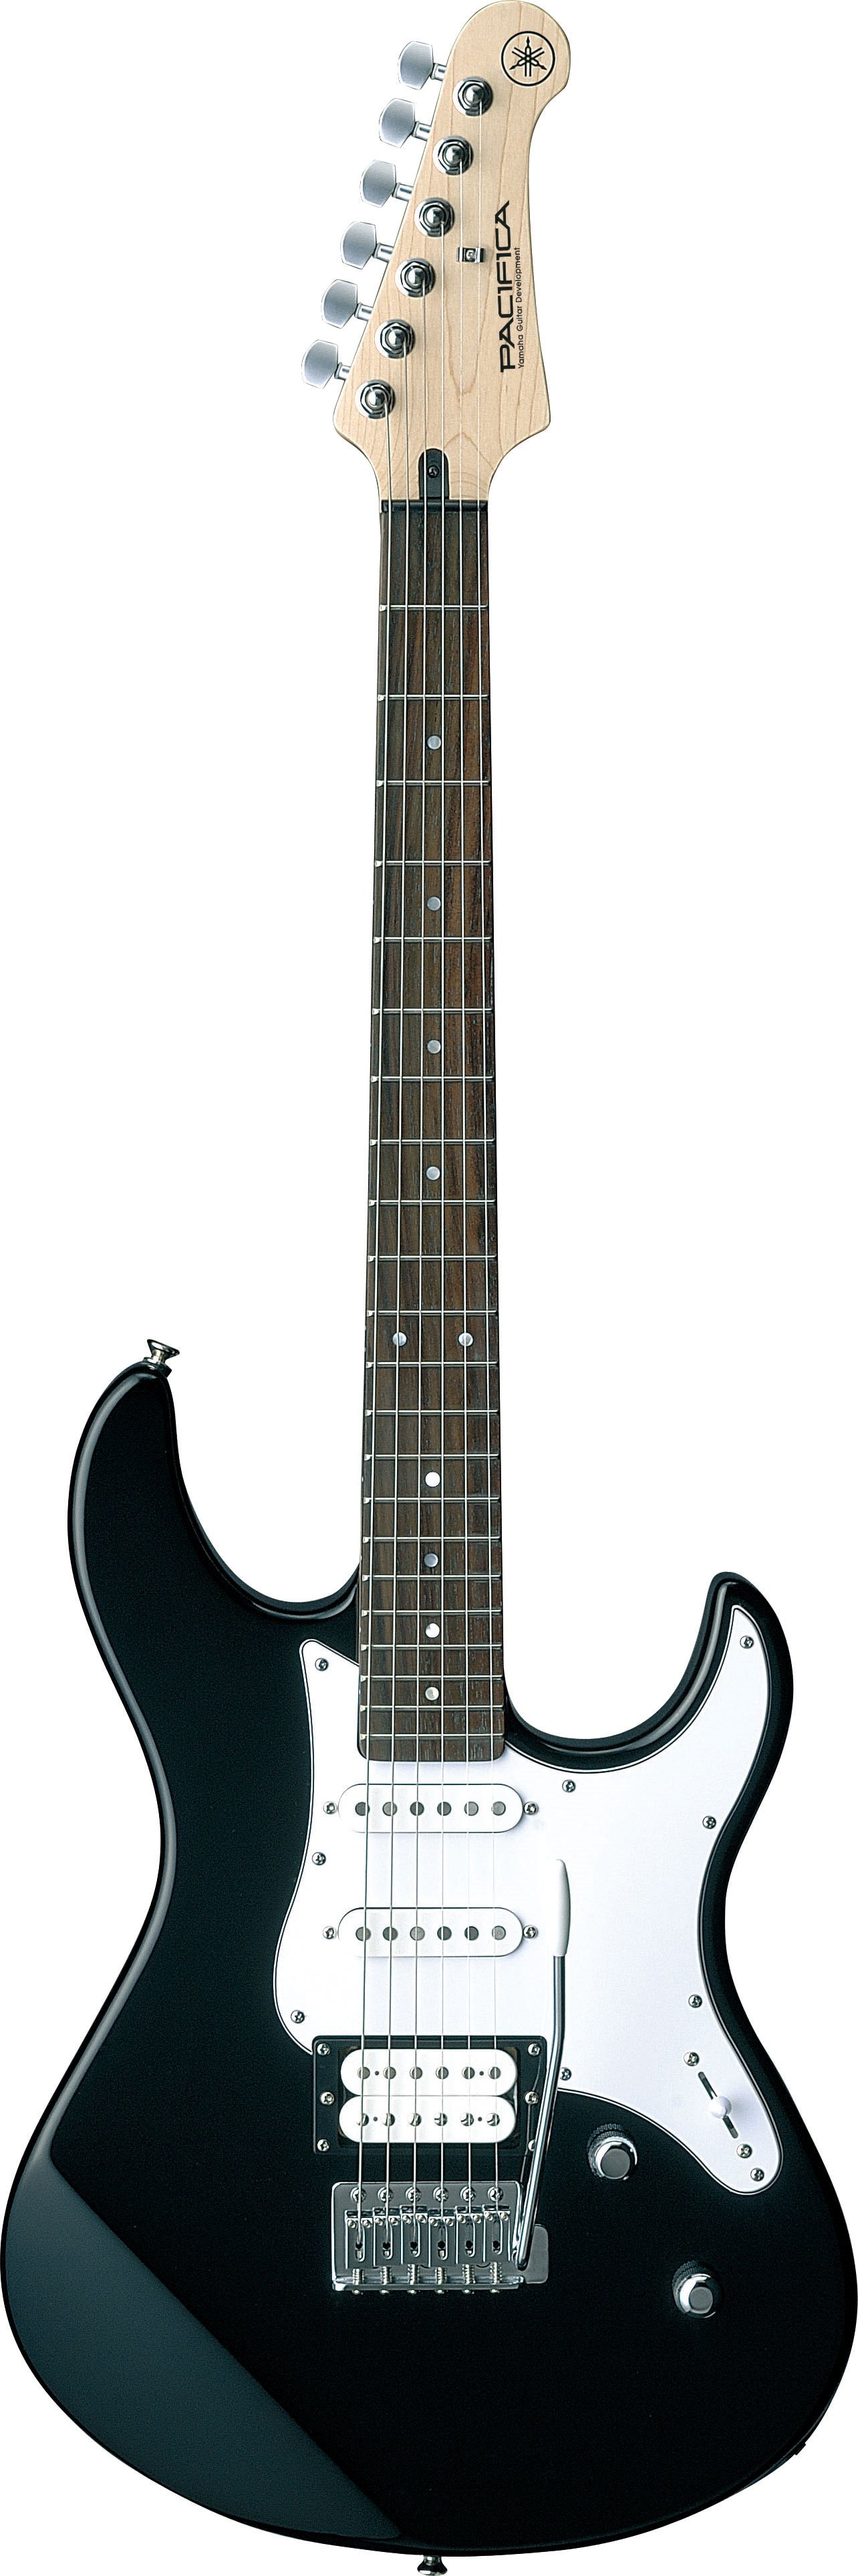 PAC012, PAC120, PAC112 Electric Guitars - Yamaha USA